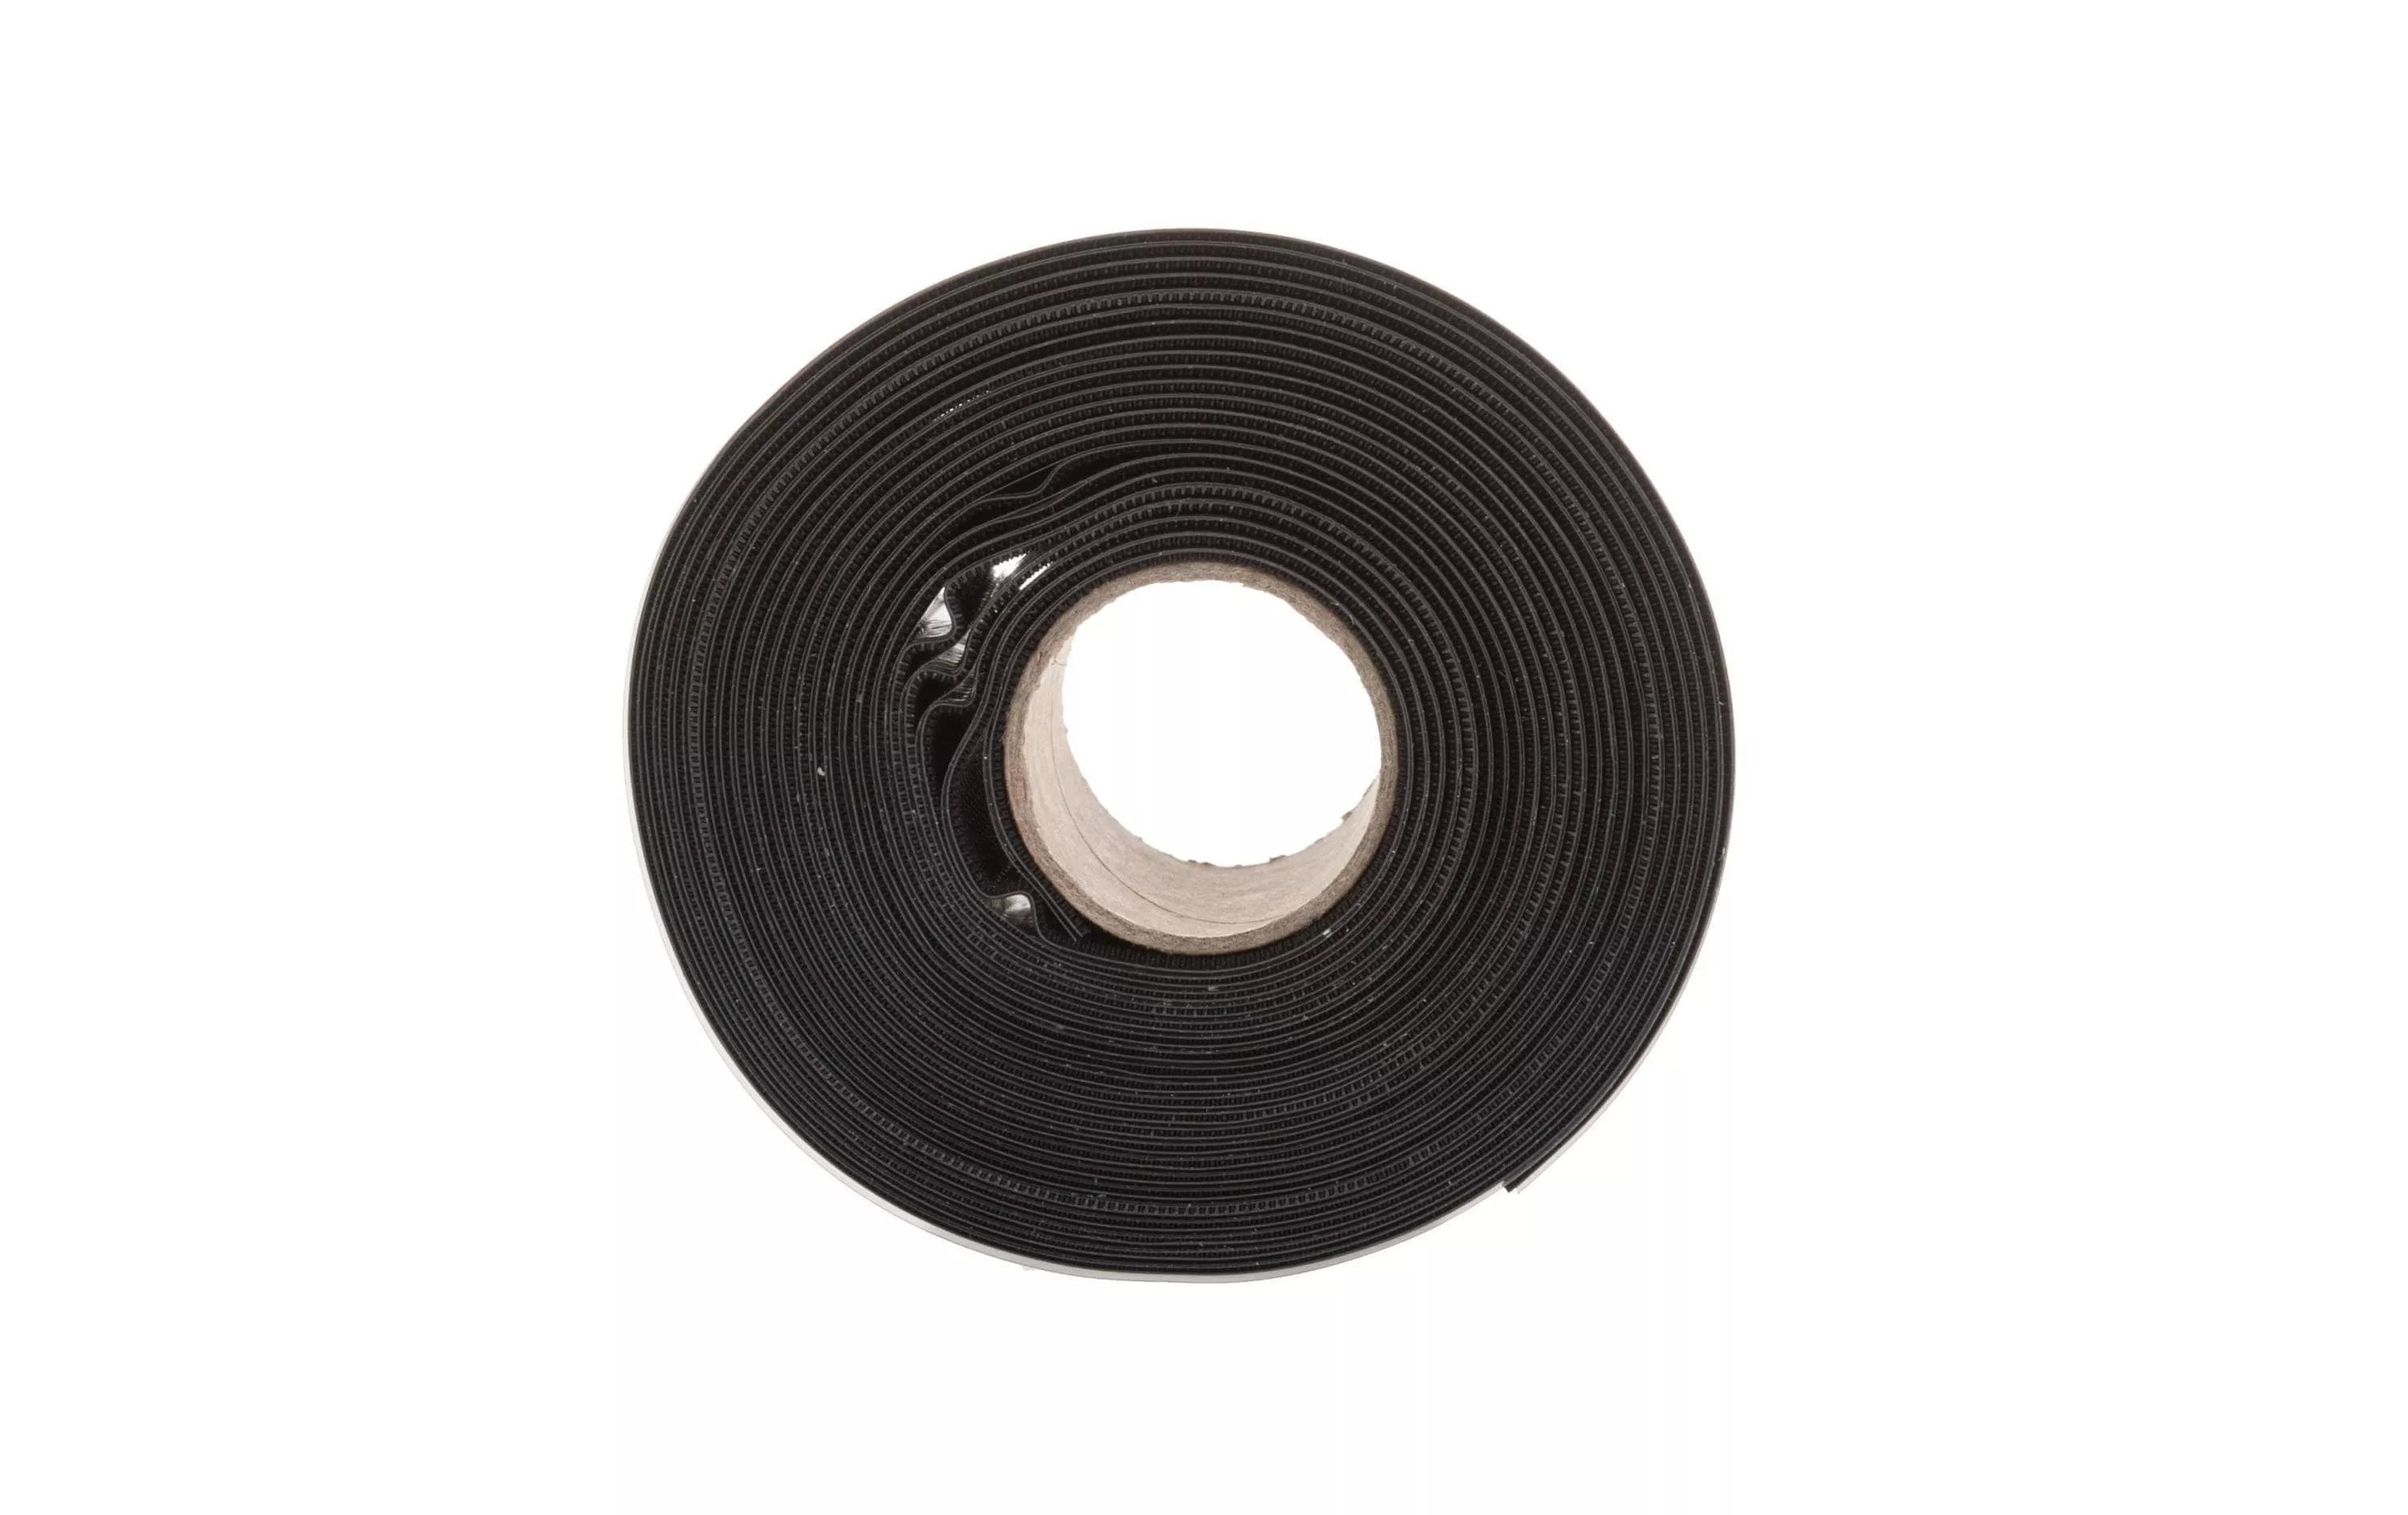 Ruban serre câbles Velcro auto agrippant - Noir - 10 mm x 5 m